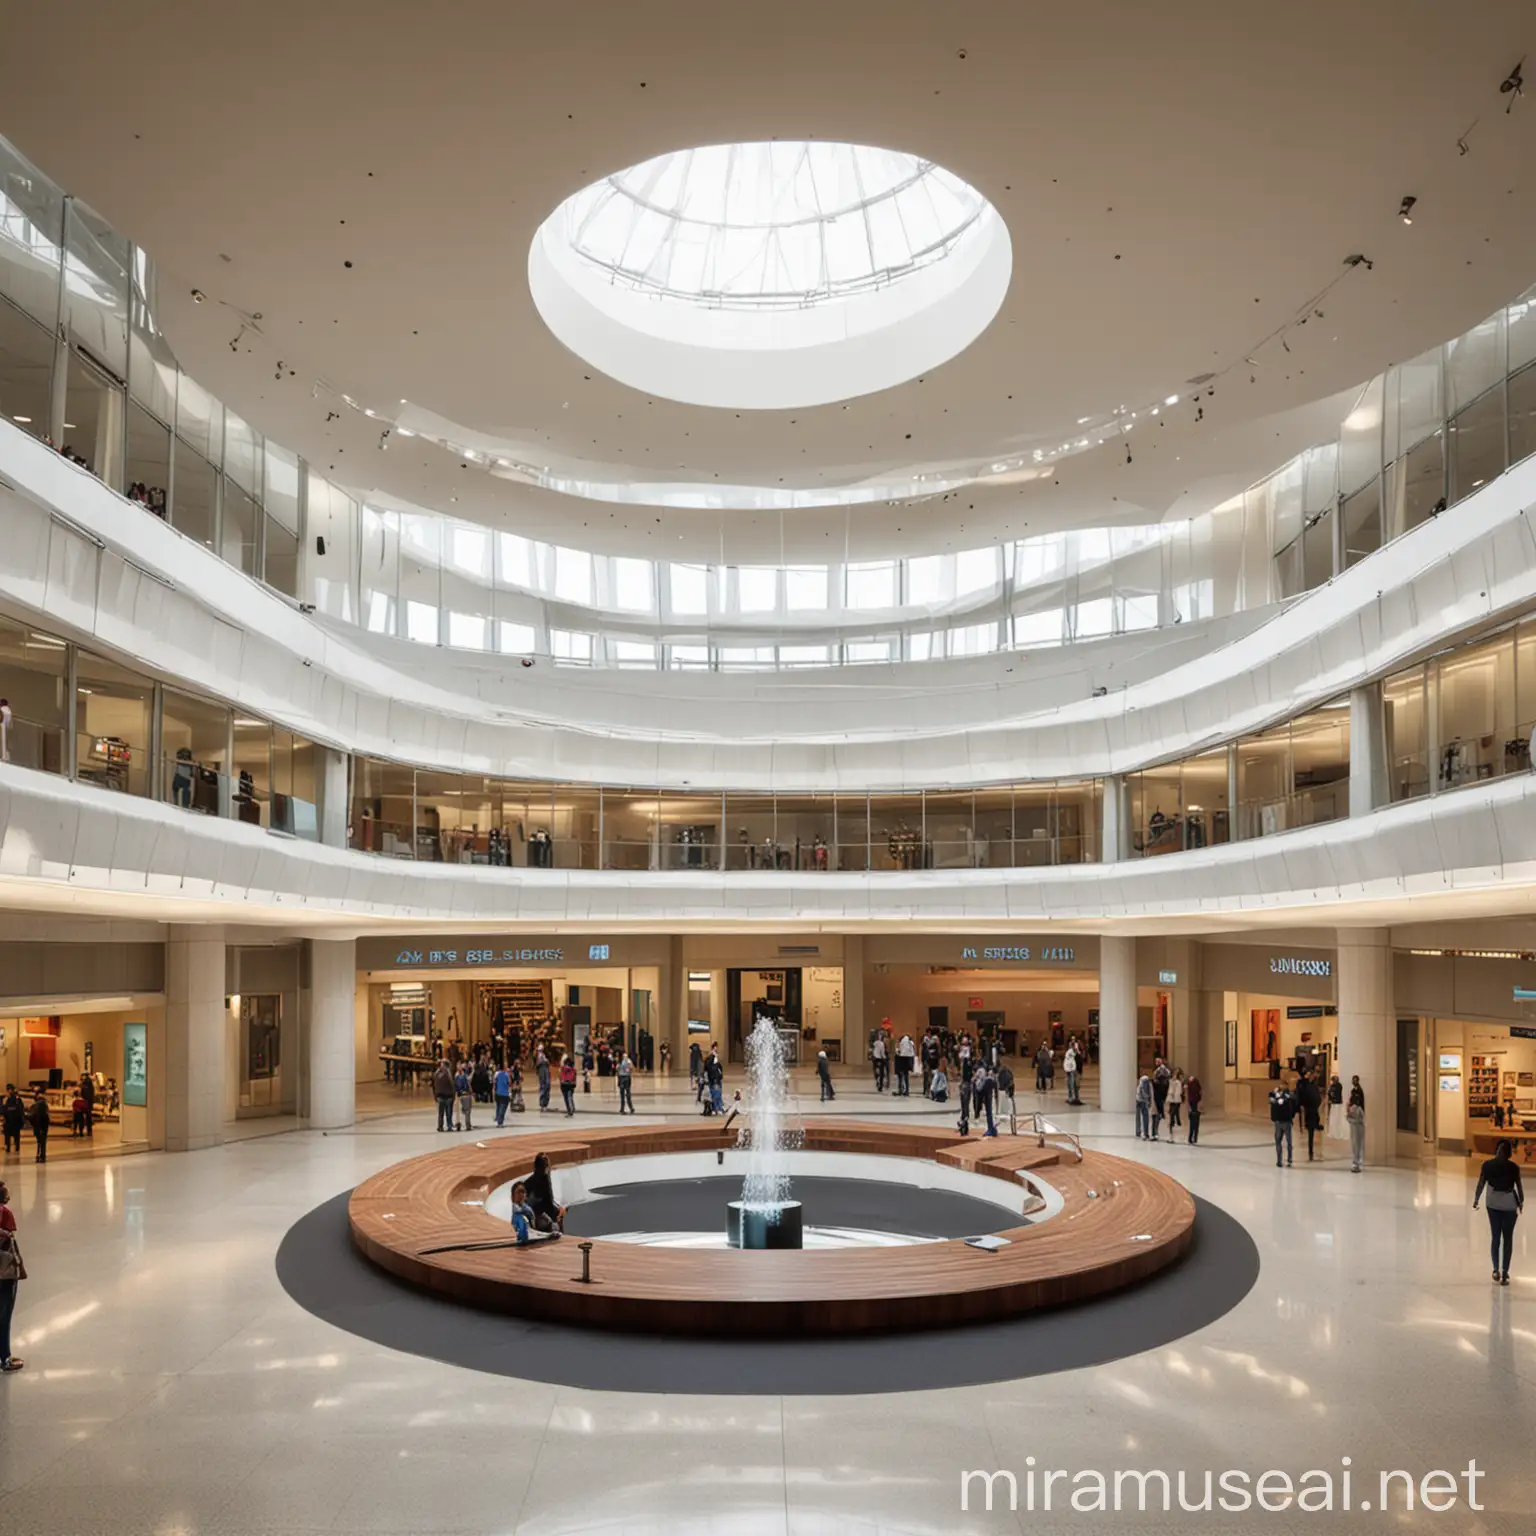 Modern Art and Science Museum Lobby with Circular Atrium